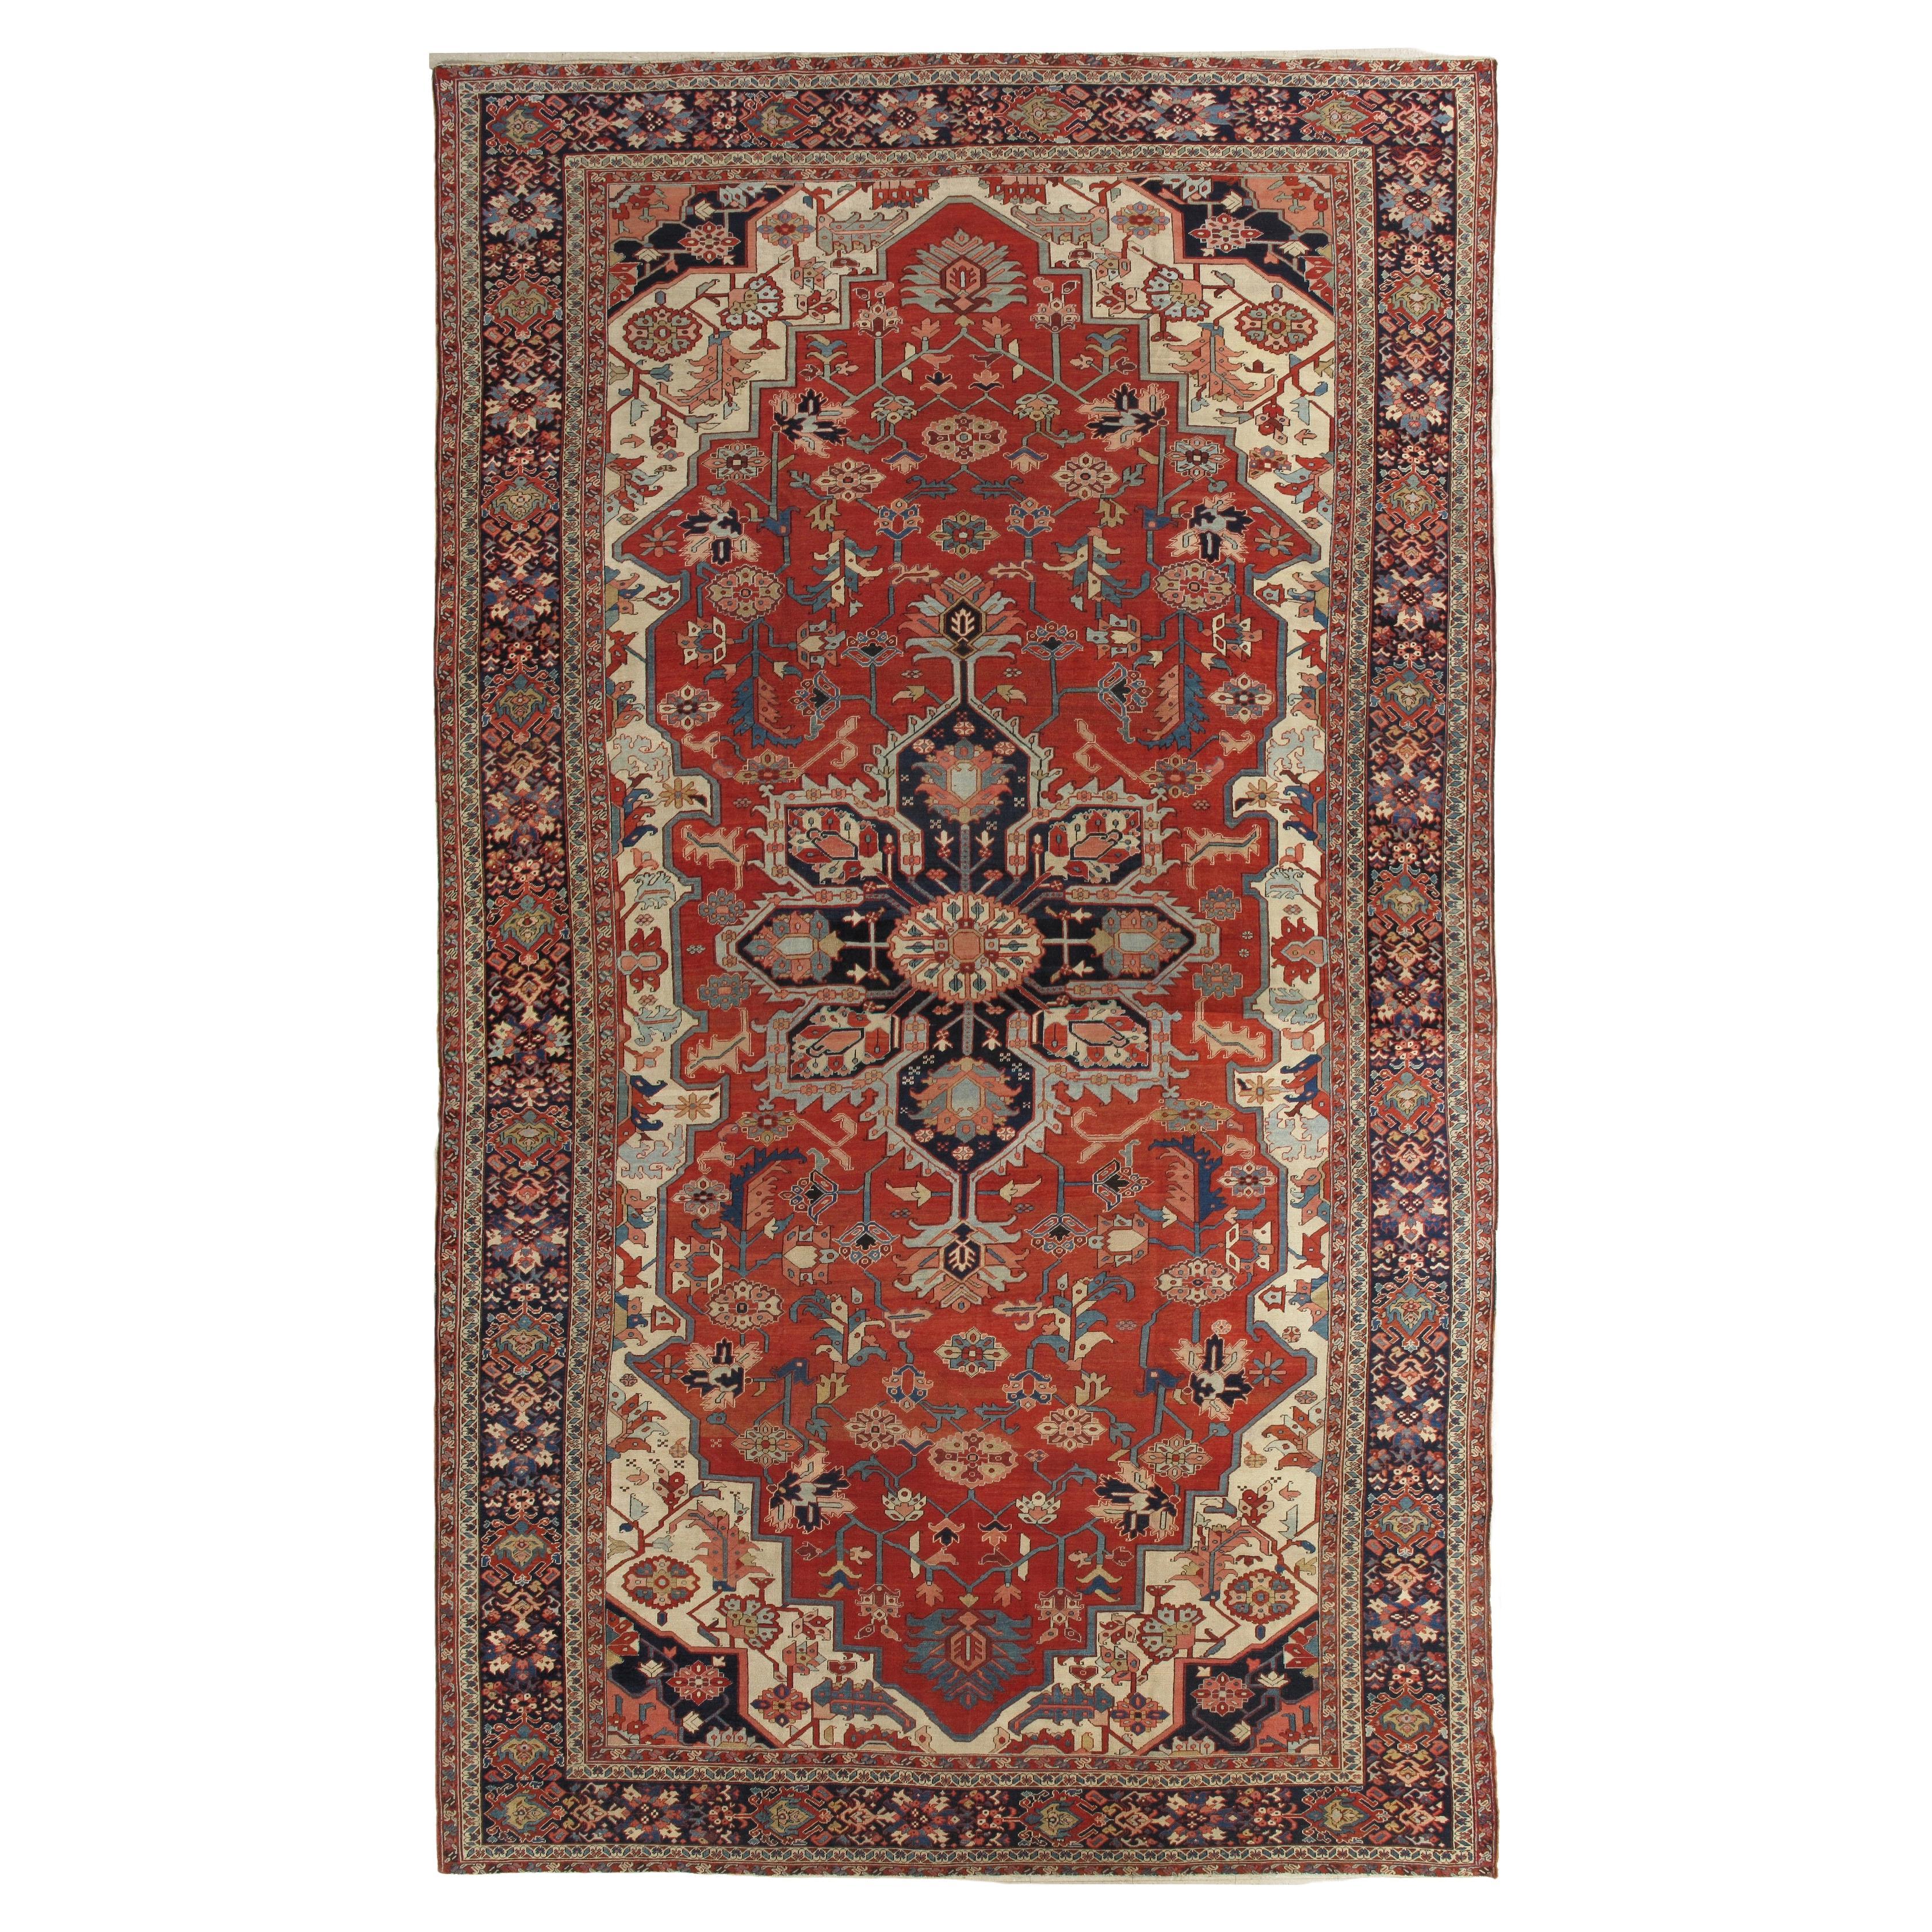 Antique Persian Serapi Carpet, Handmade Wool Oriental Rug Ivory, Rust Light Blue